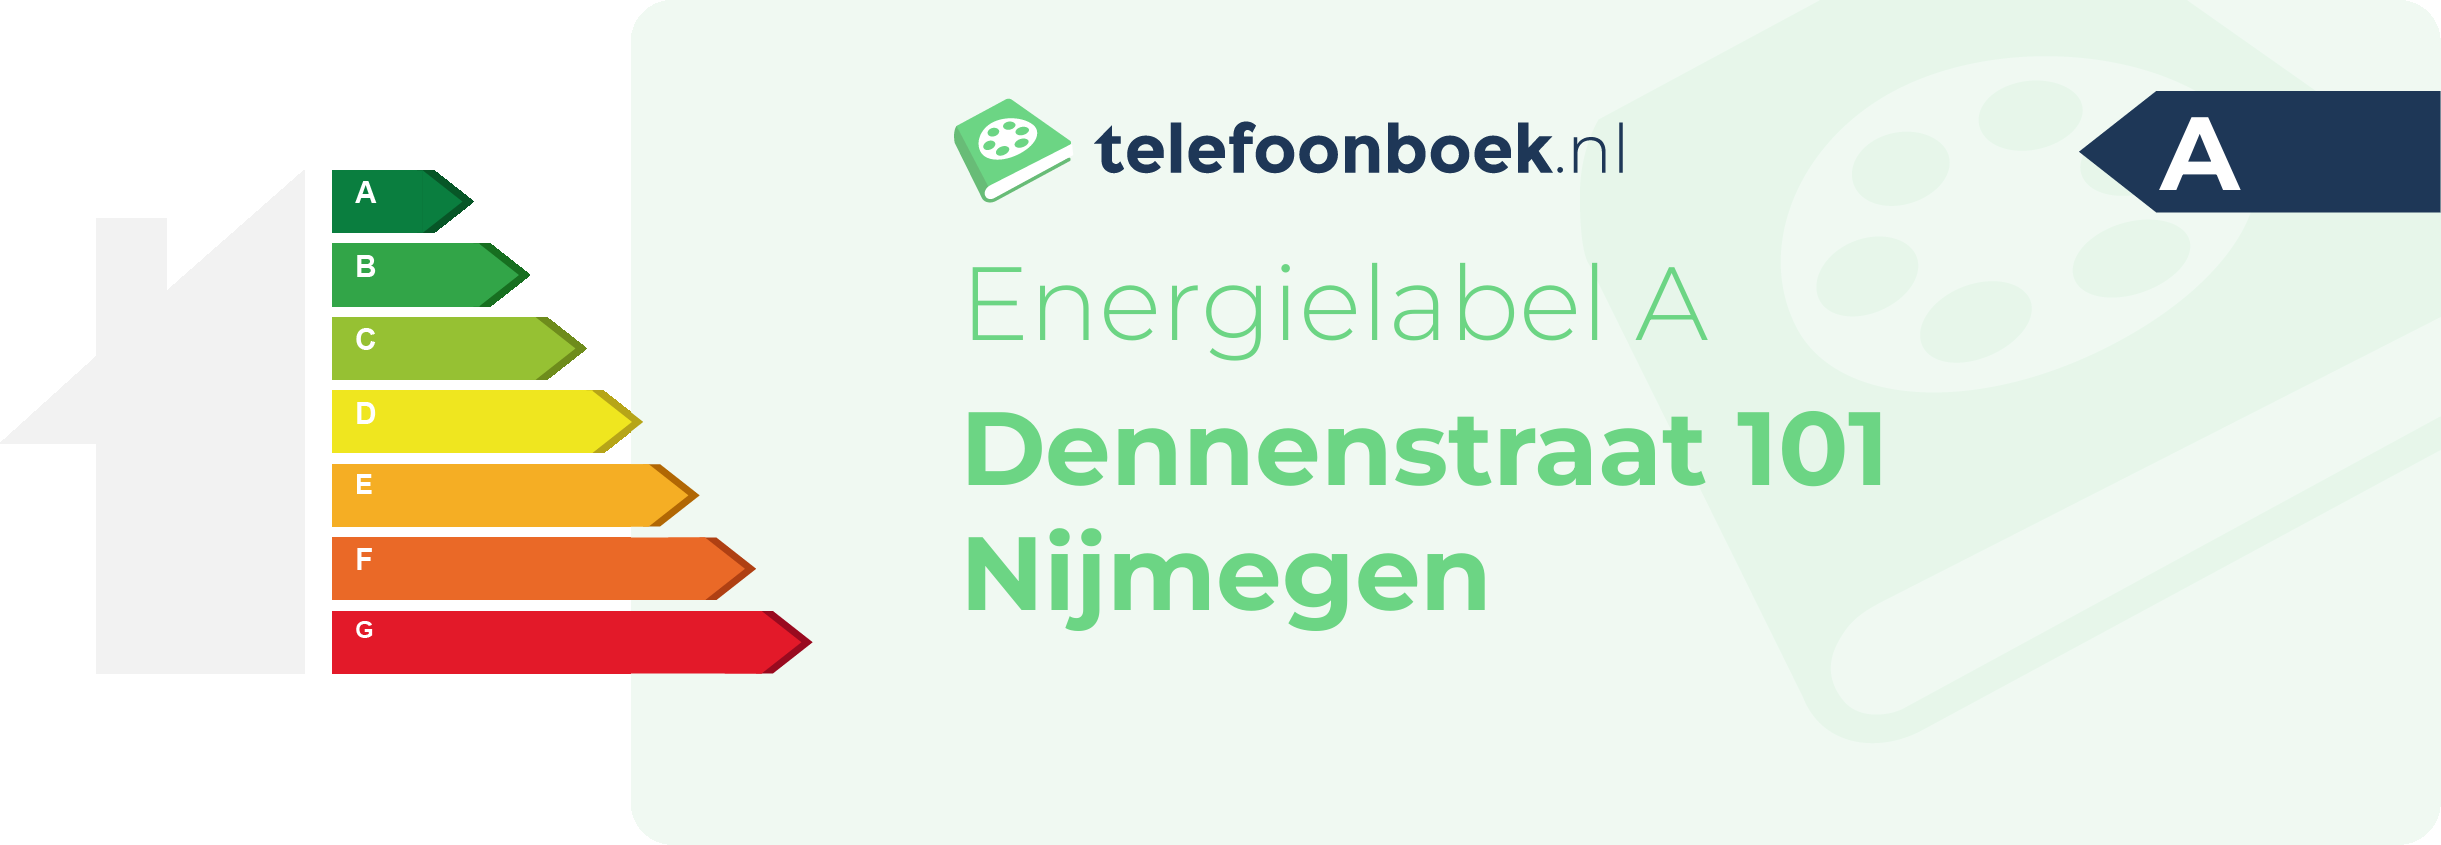 Energielabel Dennenstraat 101 Nijmegen